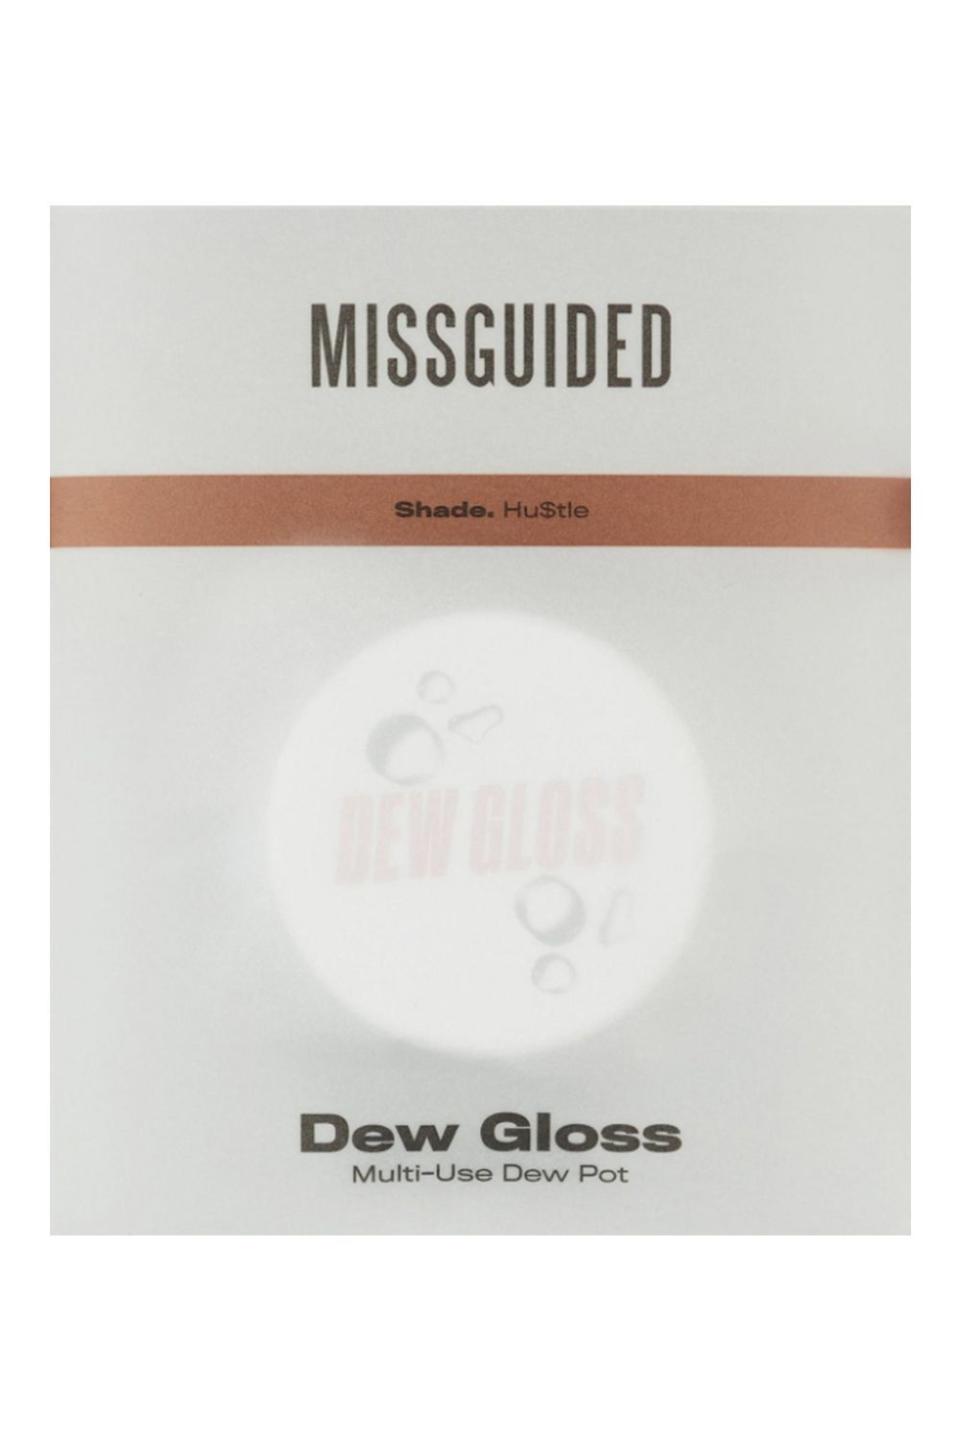 7) Missguided Dew Gloss Multi Use Dew Pot